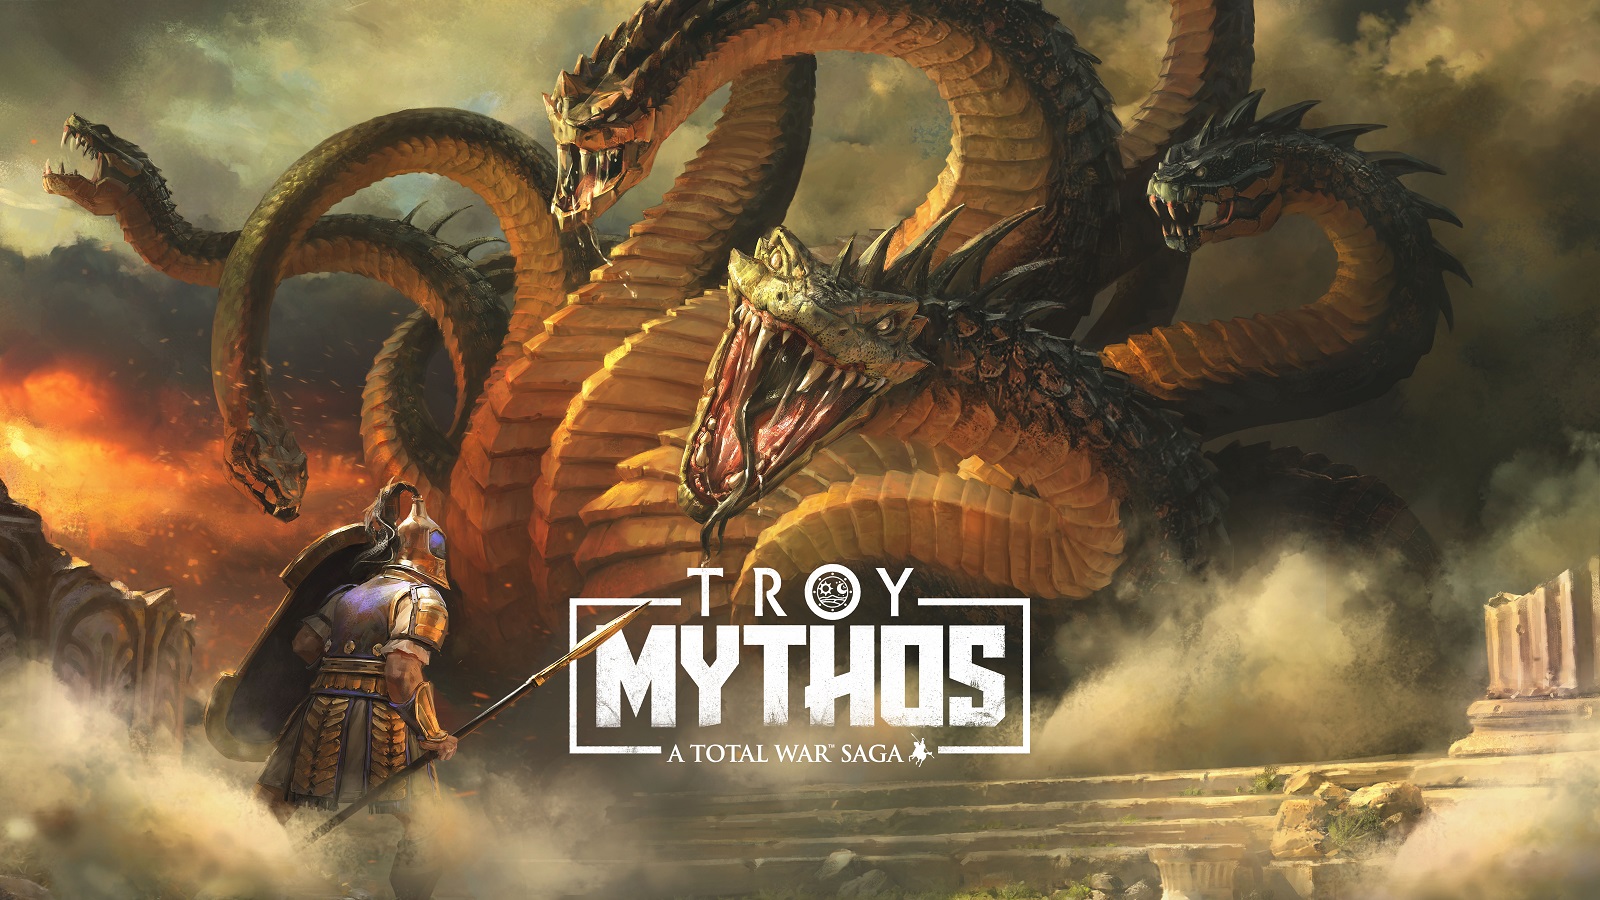 Expansão MYTHOS de A Total War Saga TROY já disponível